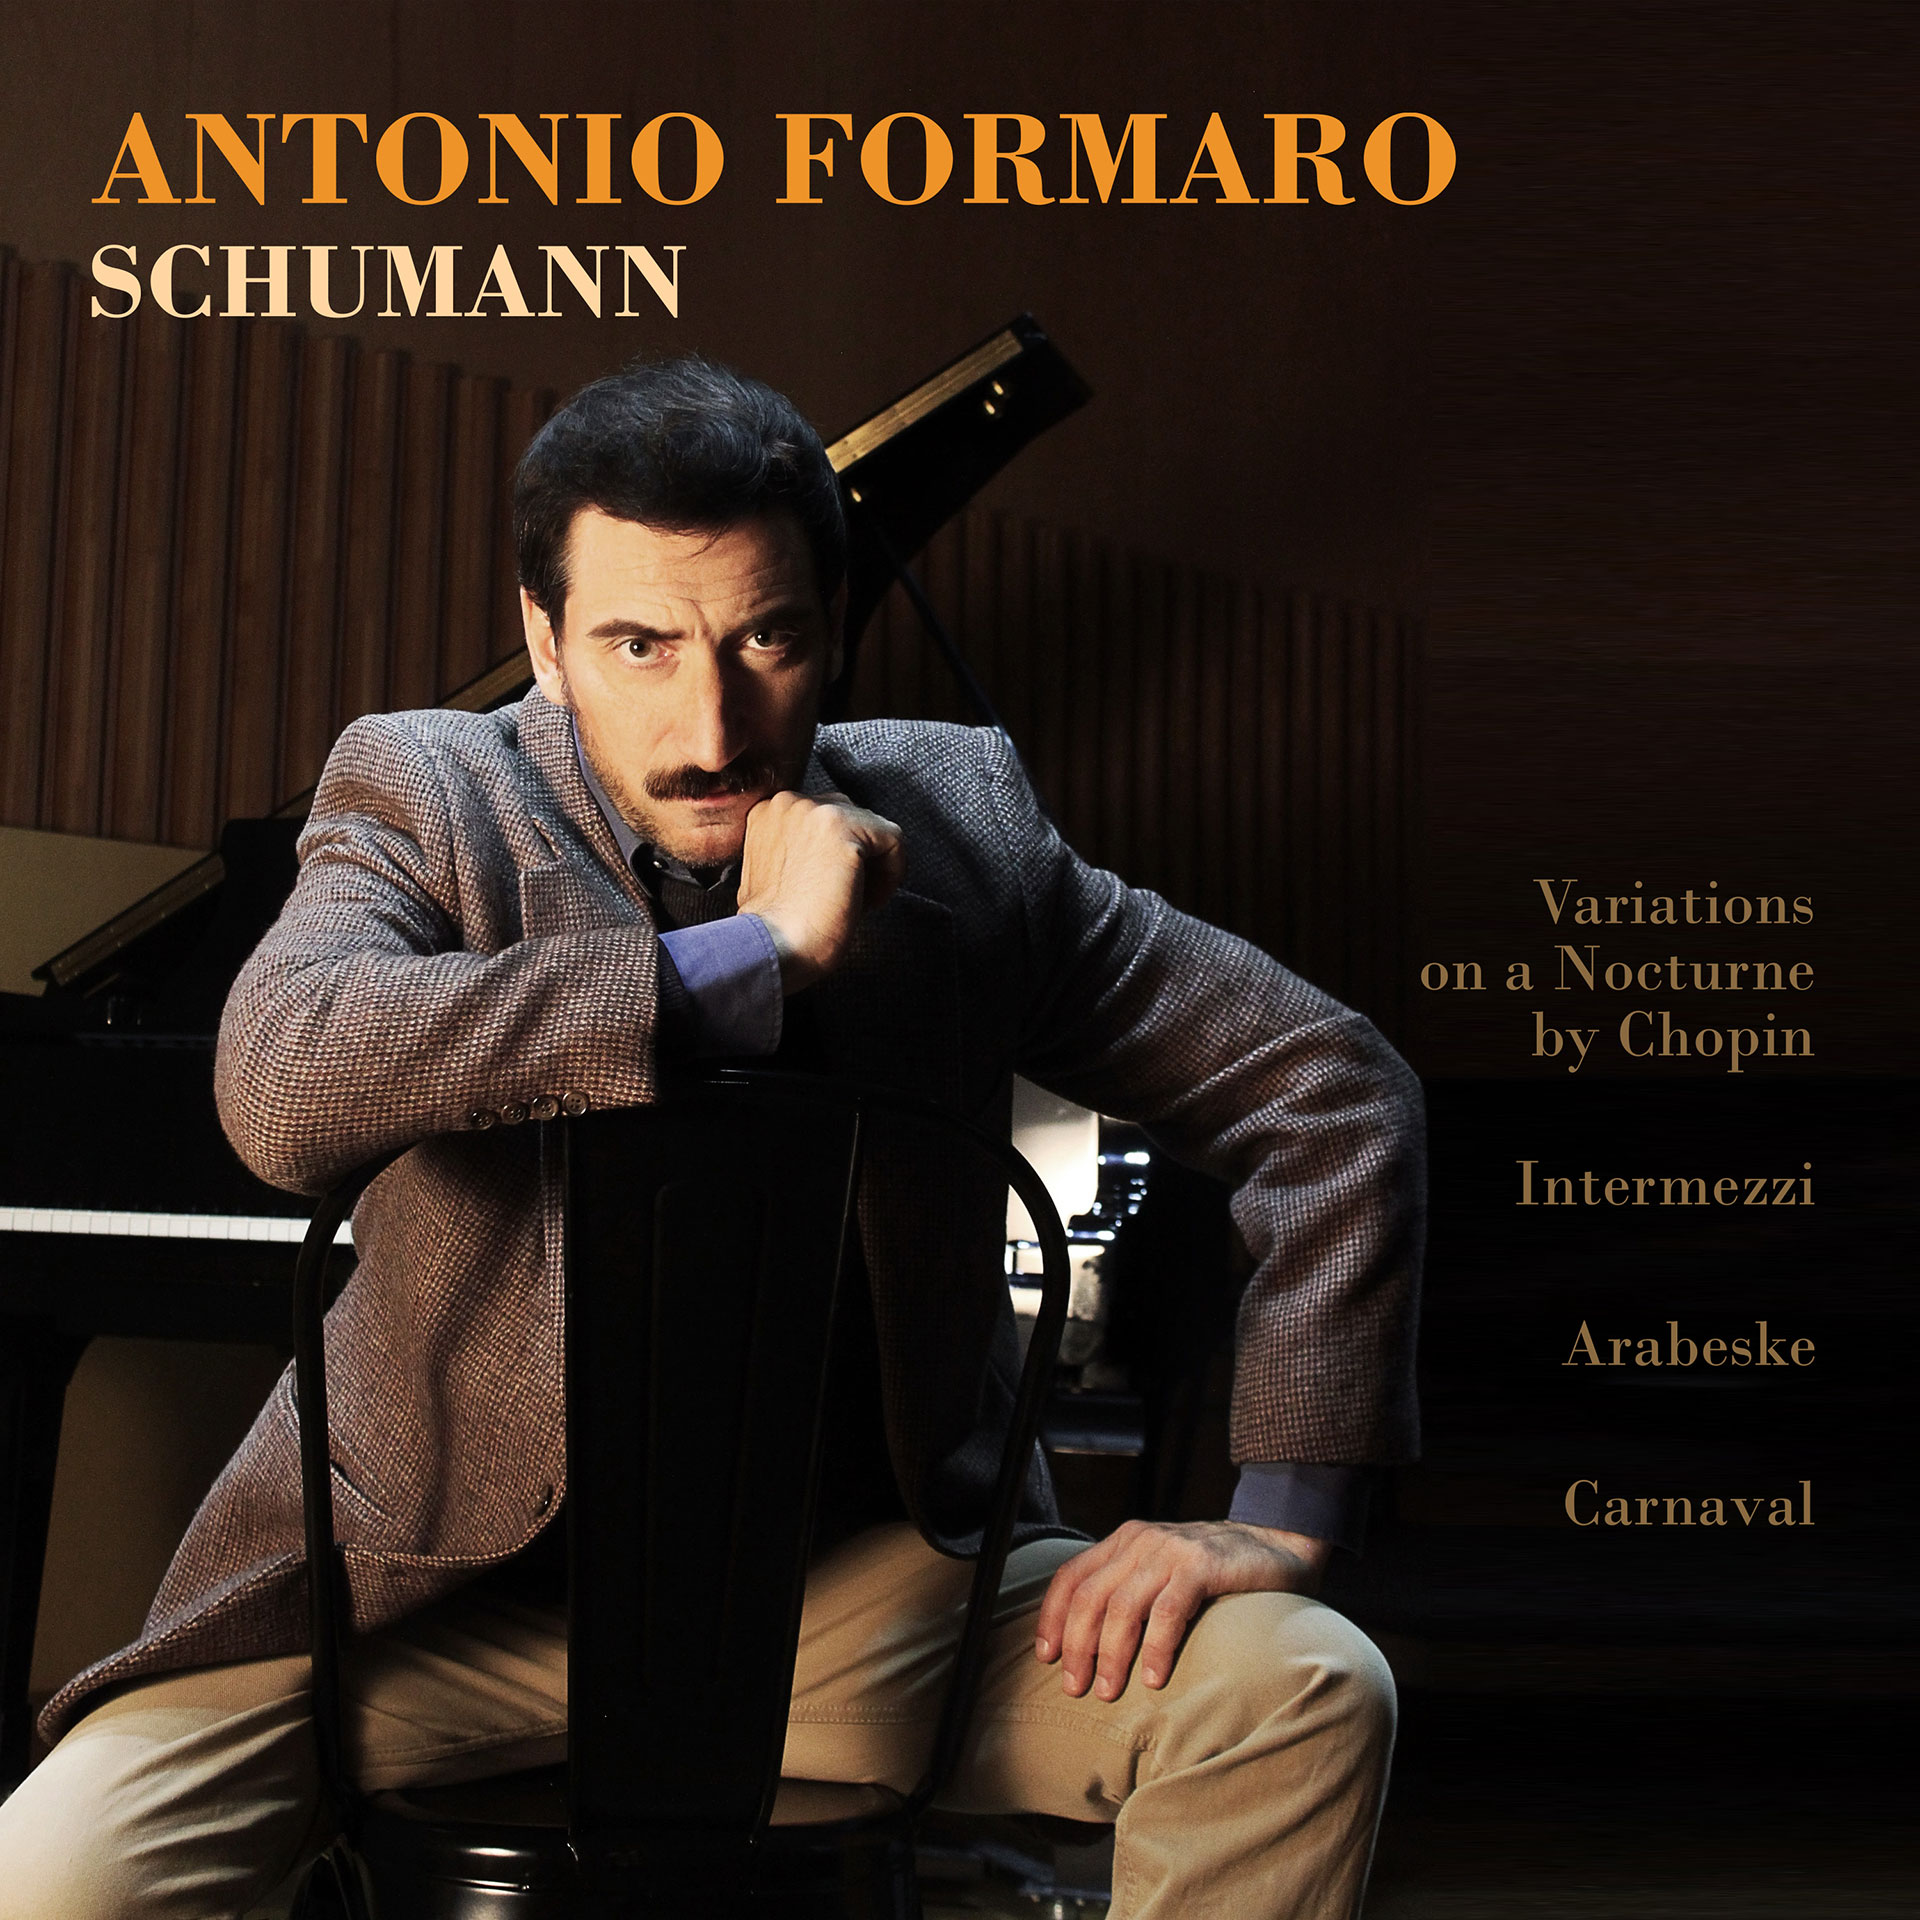 Antonio Formaro Schumann